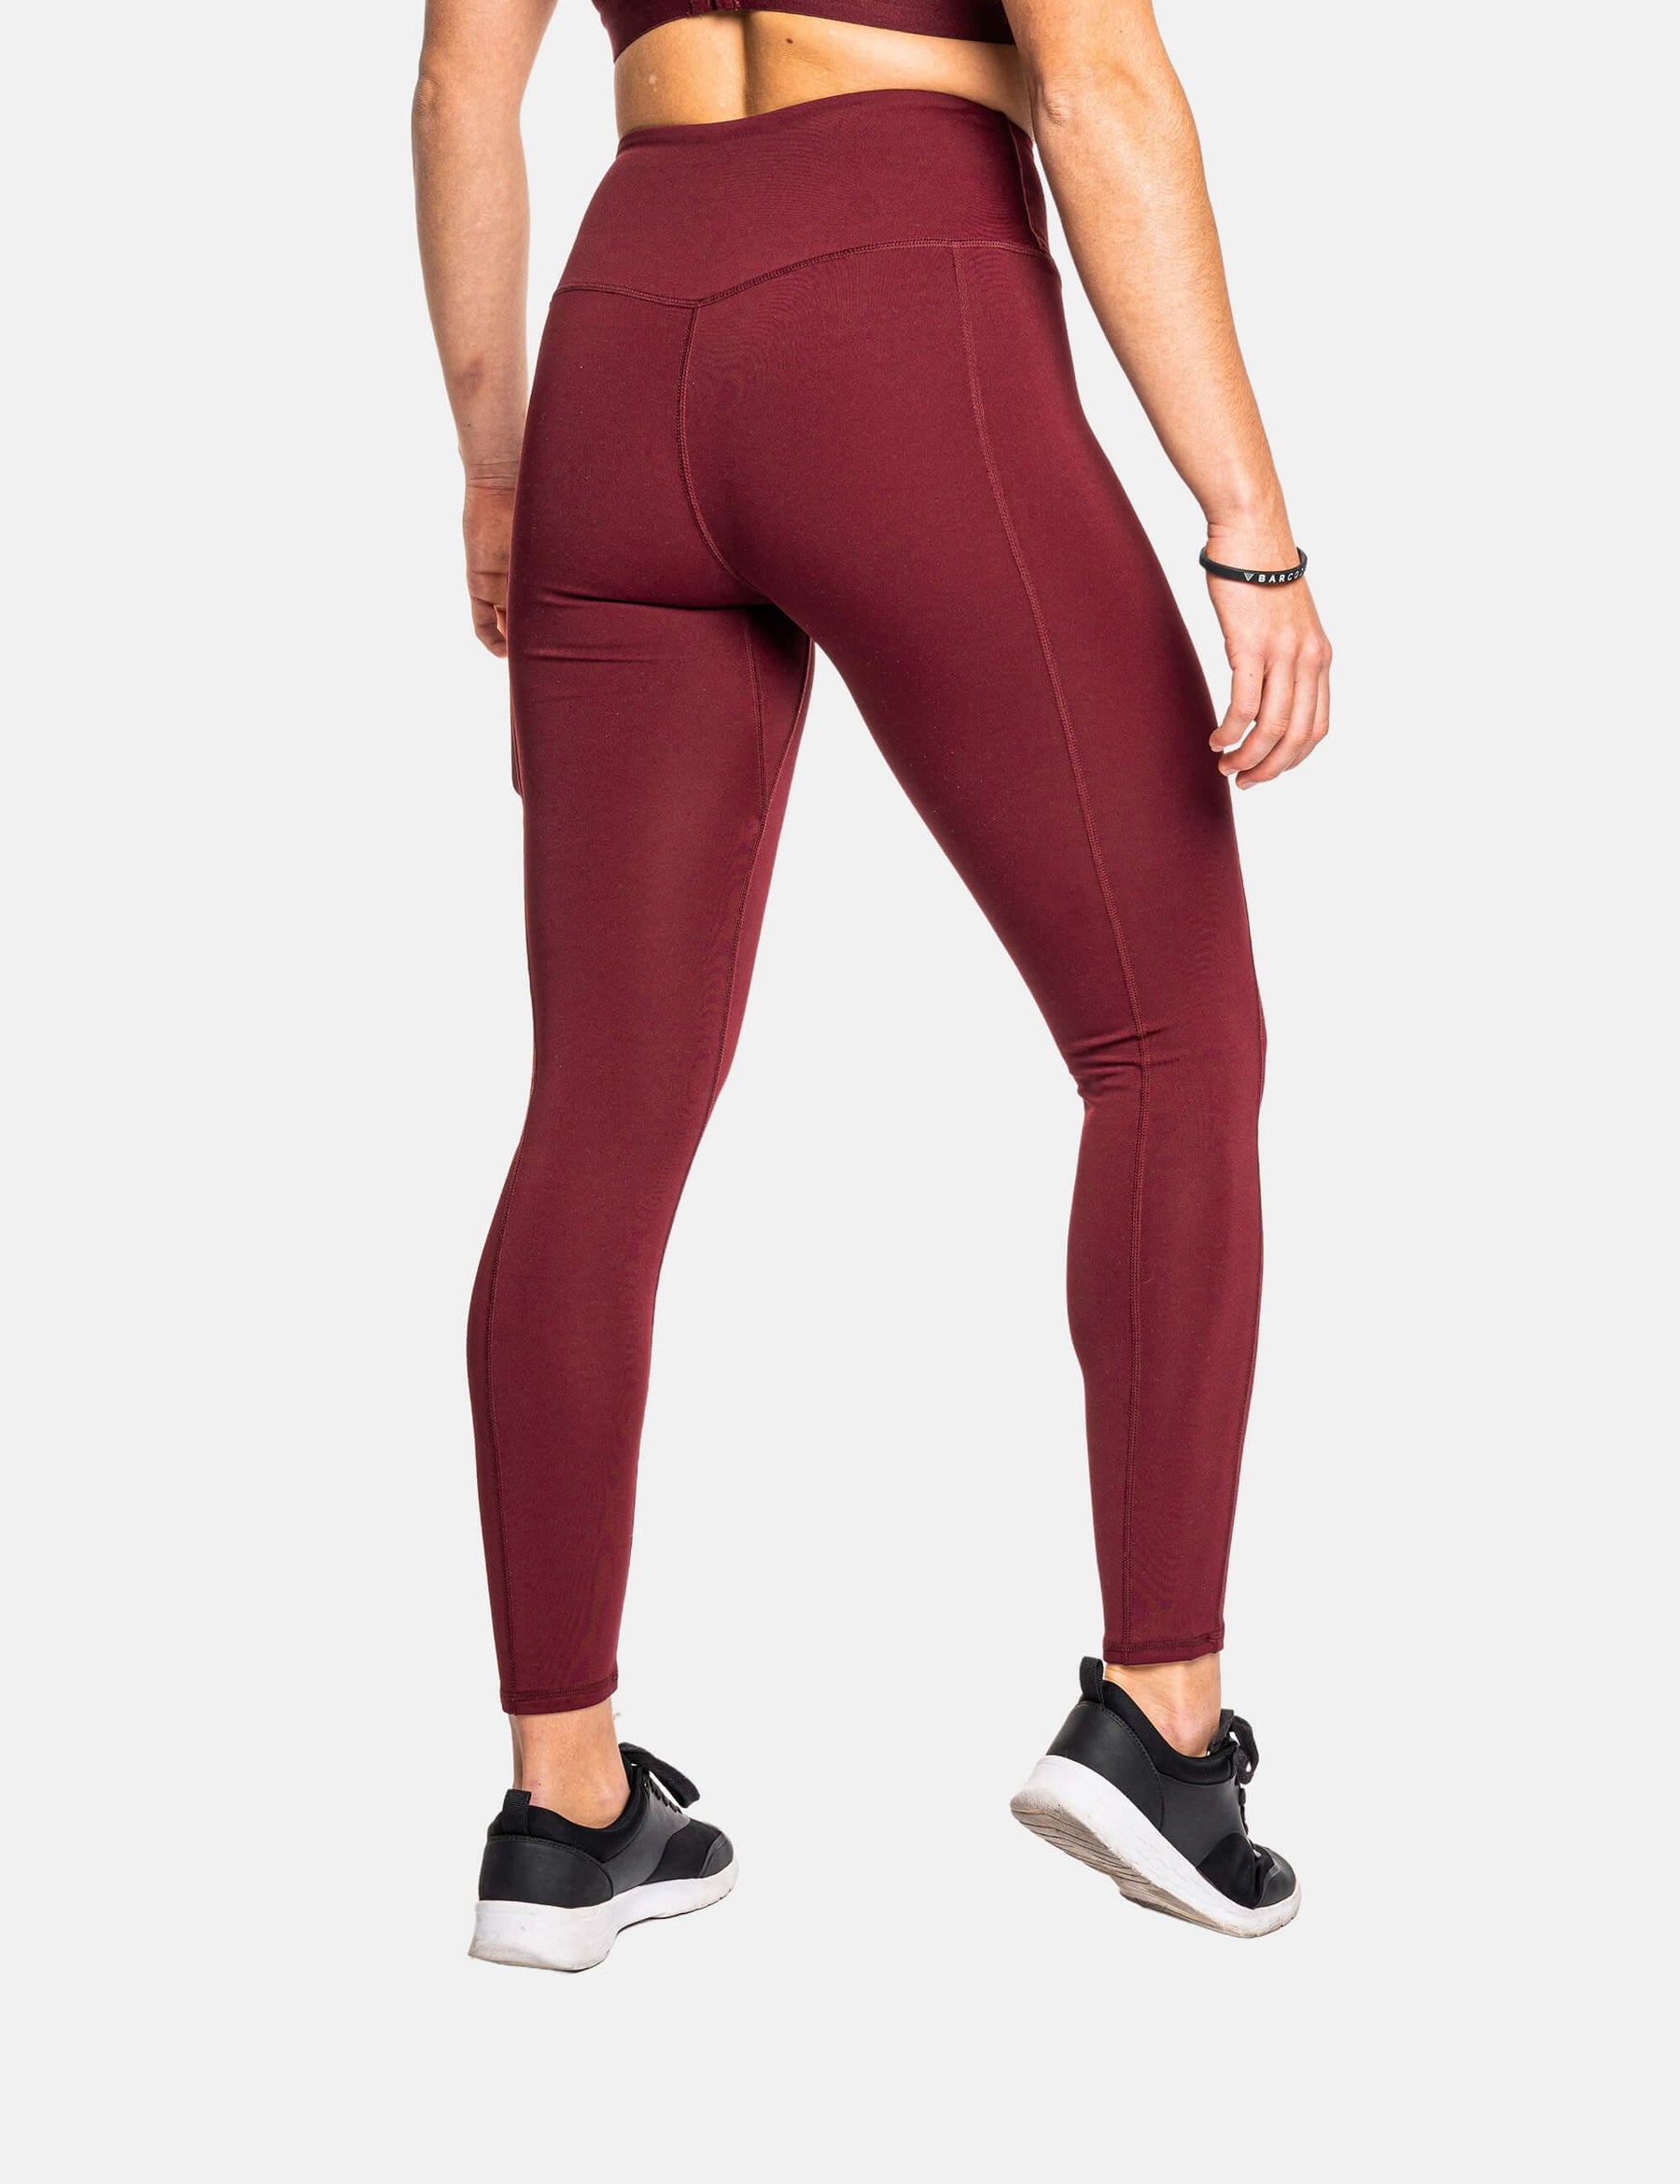 product photo of burgundy calisthenics leggings. Back side